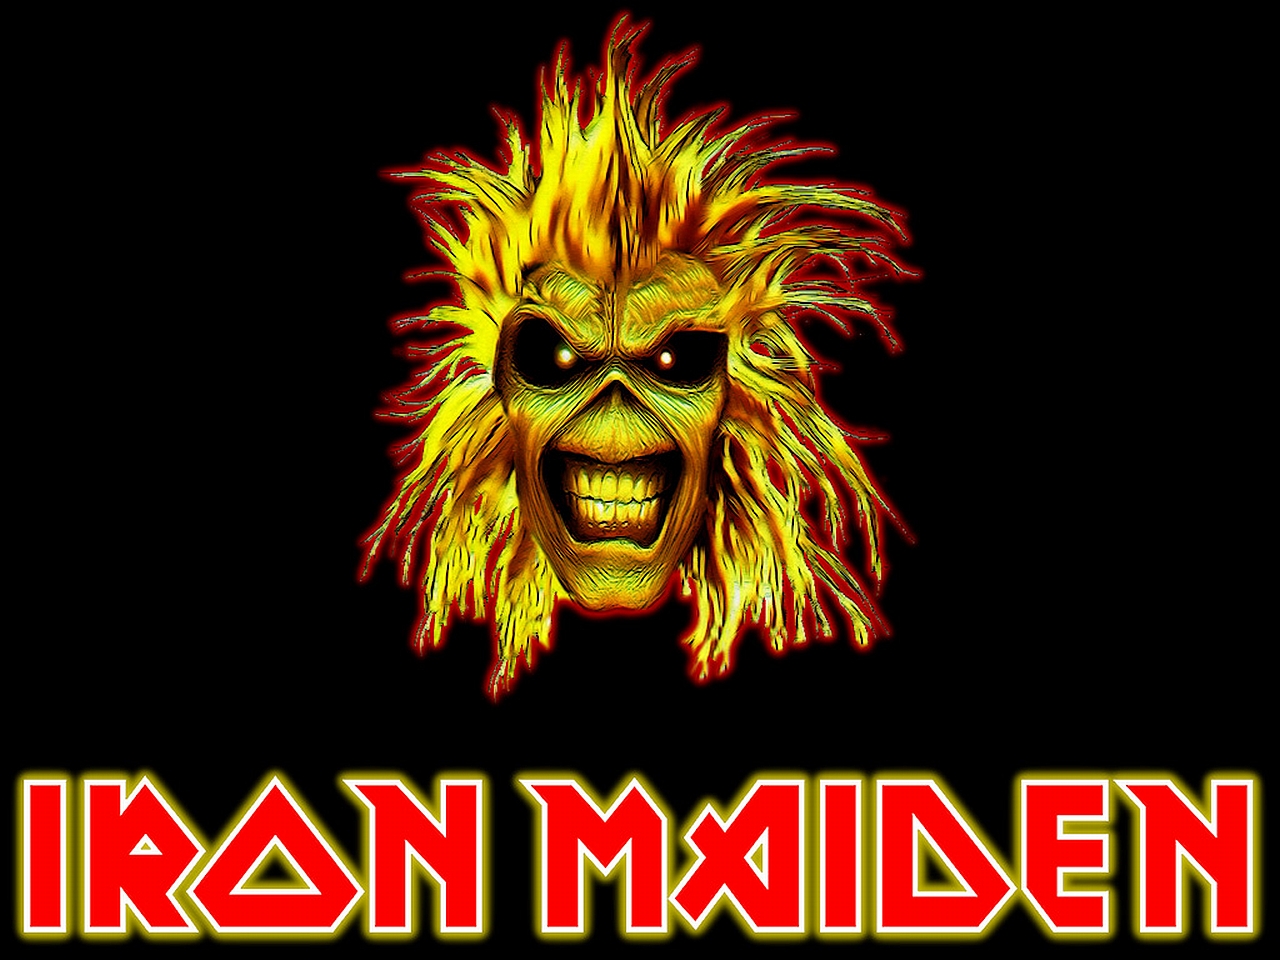 Iron Maiden Logo Wallpaper - WallpaperSafari